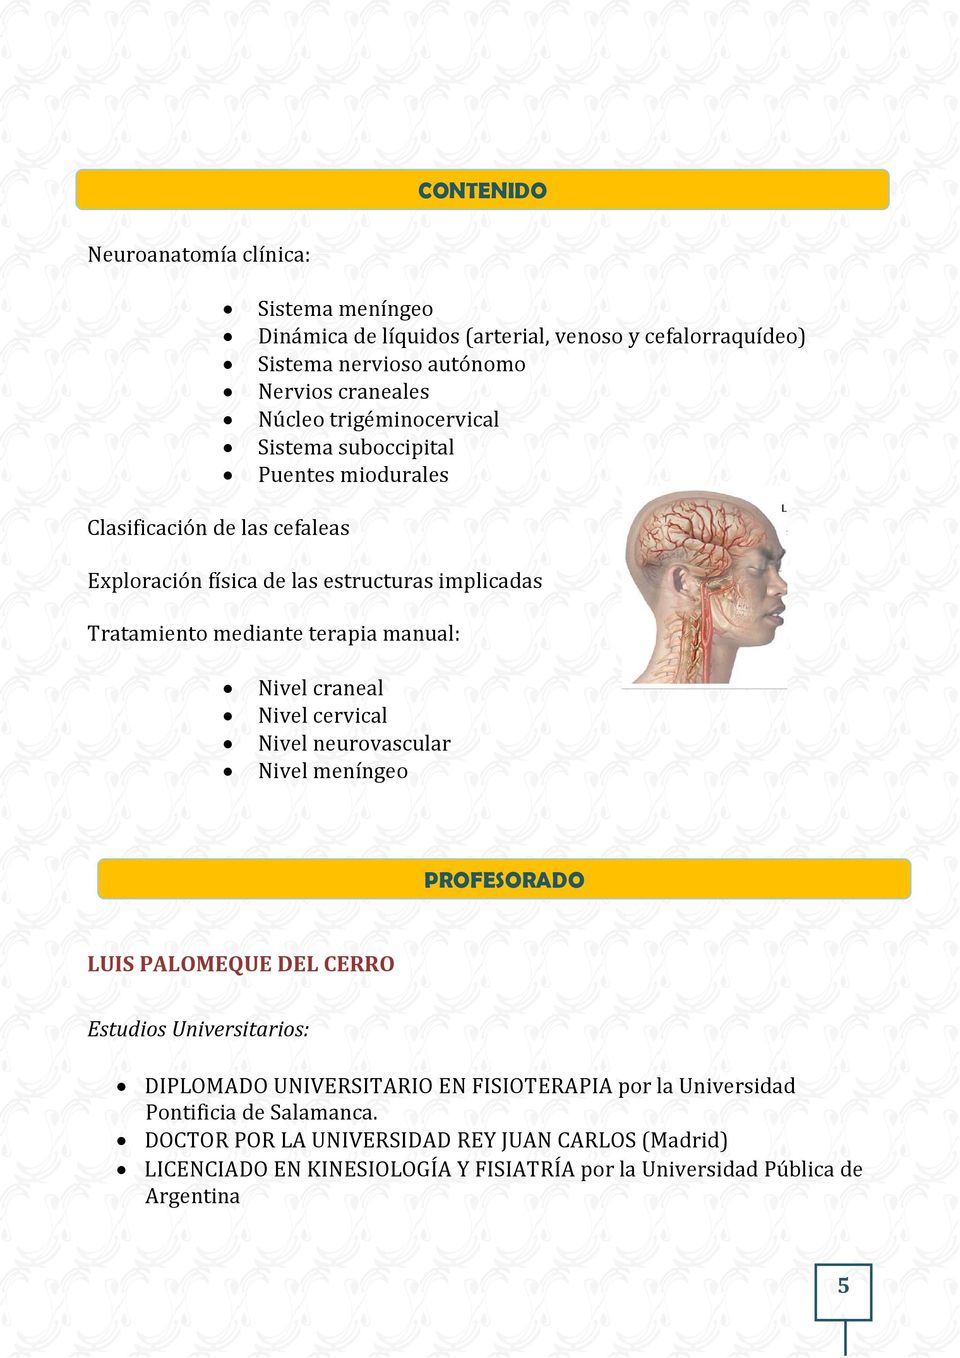 manual: Nivel craneal Nivel cervical Nivel neurovascular Nivel meníngeo PROFESORADO LUIS PALOMEQUE DEL CERRO Estudios Universitarios: DIPLOMADO UNIVERSITARIO EN